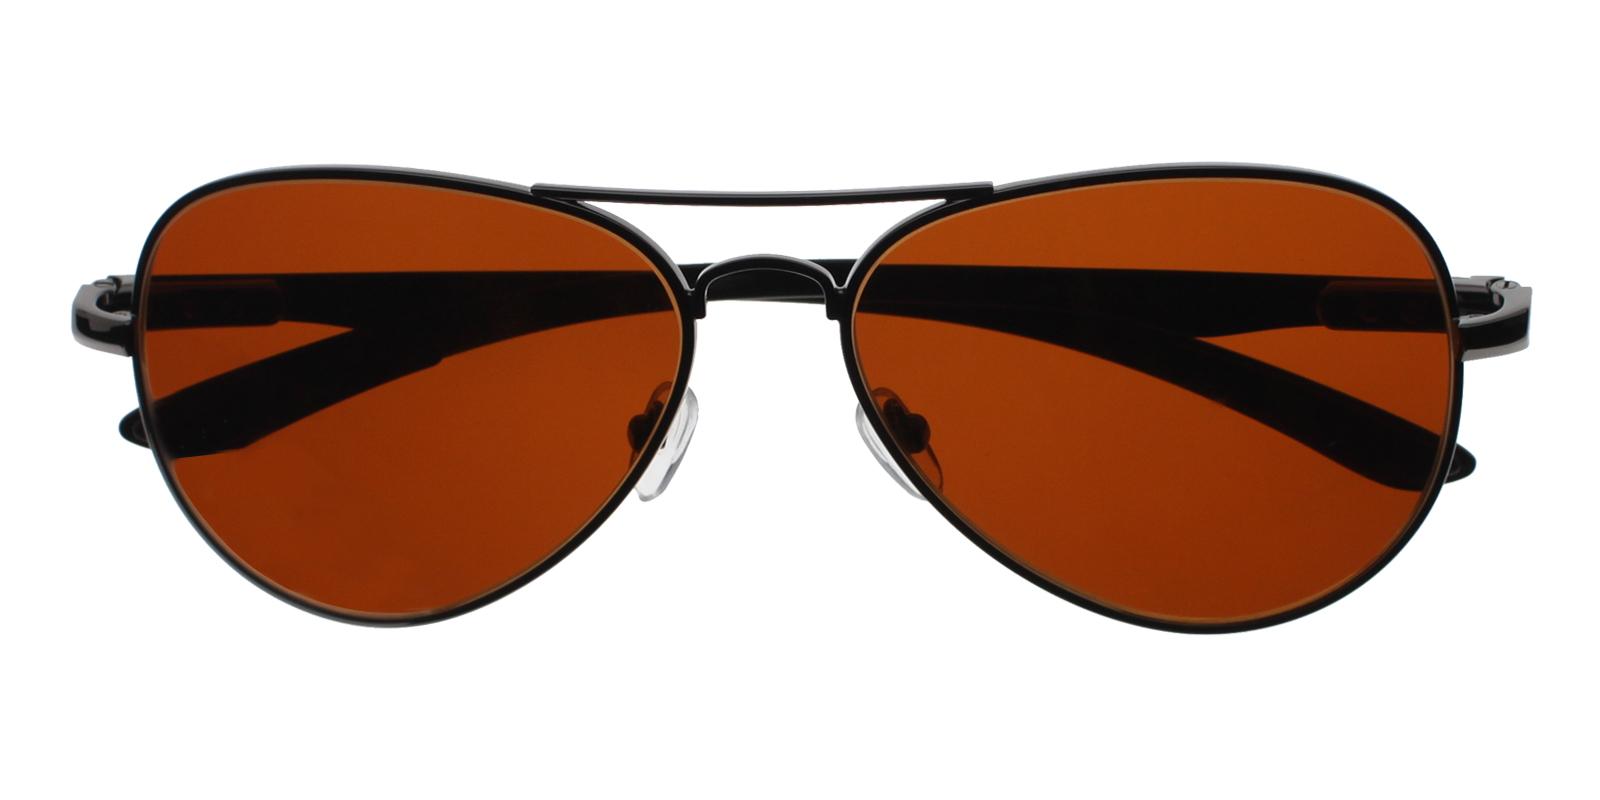 Logan Gun Metal Sunglasses , NosePads Frames from ABBE Glasses